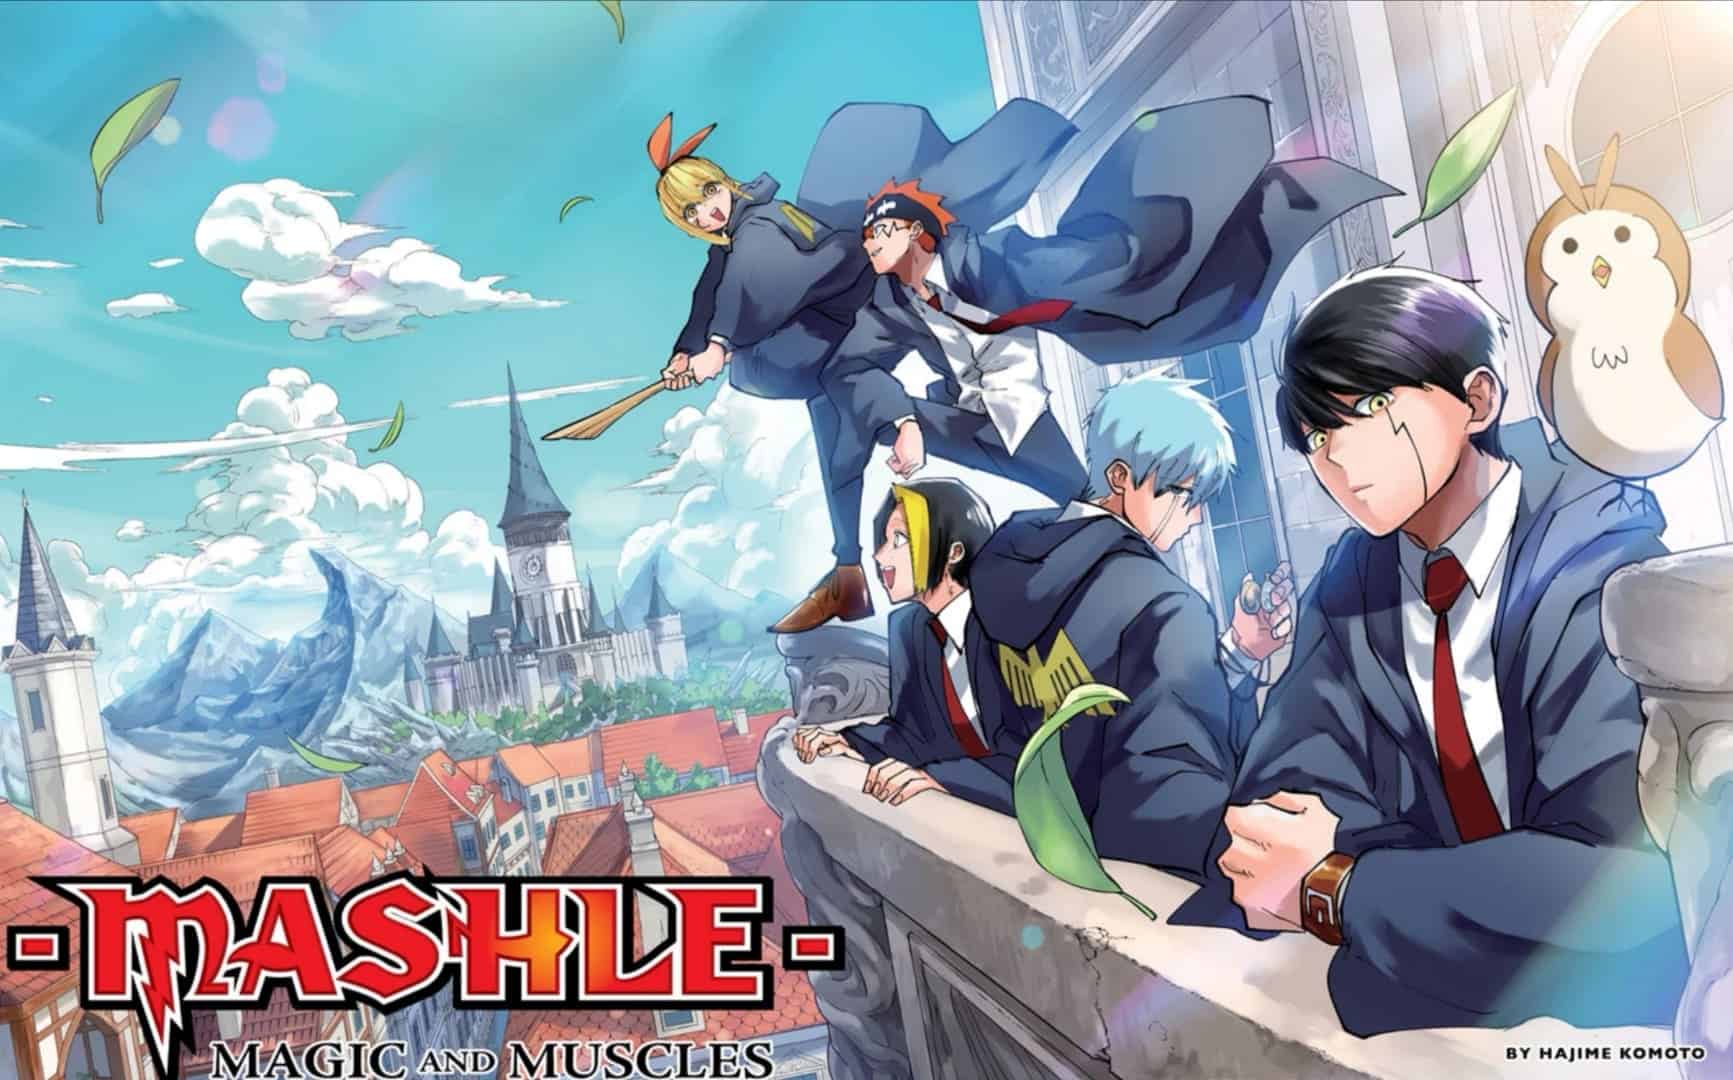 MASHLE: MAGIC AND MUSCLES Streaming on Crunchyroll in April!, anime,  profiterole, manga